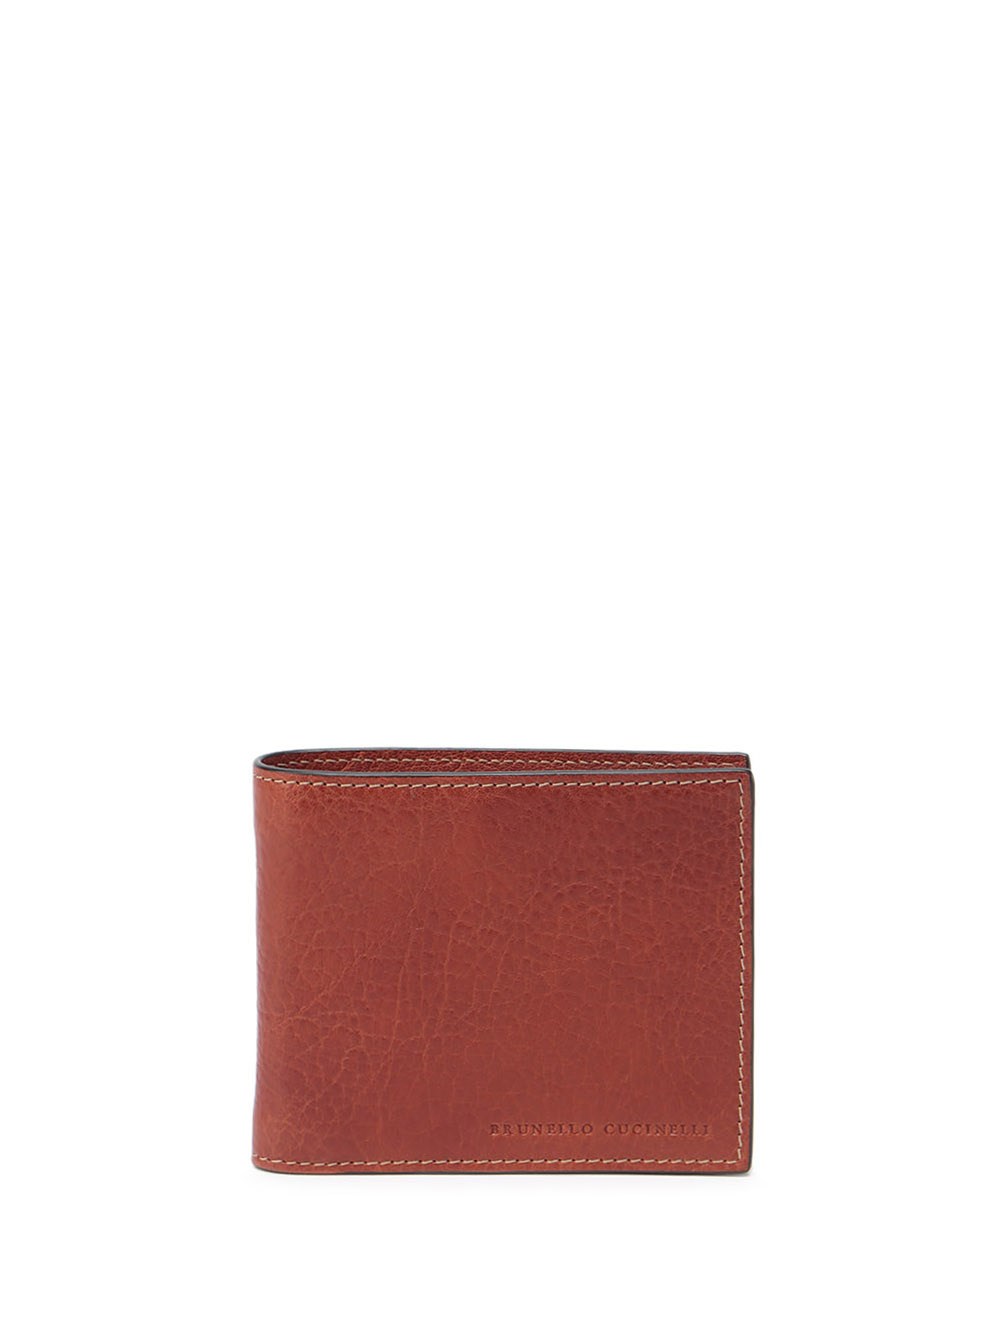 Brunello Cucinelli Leather Wallet In Marrone